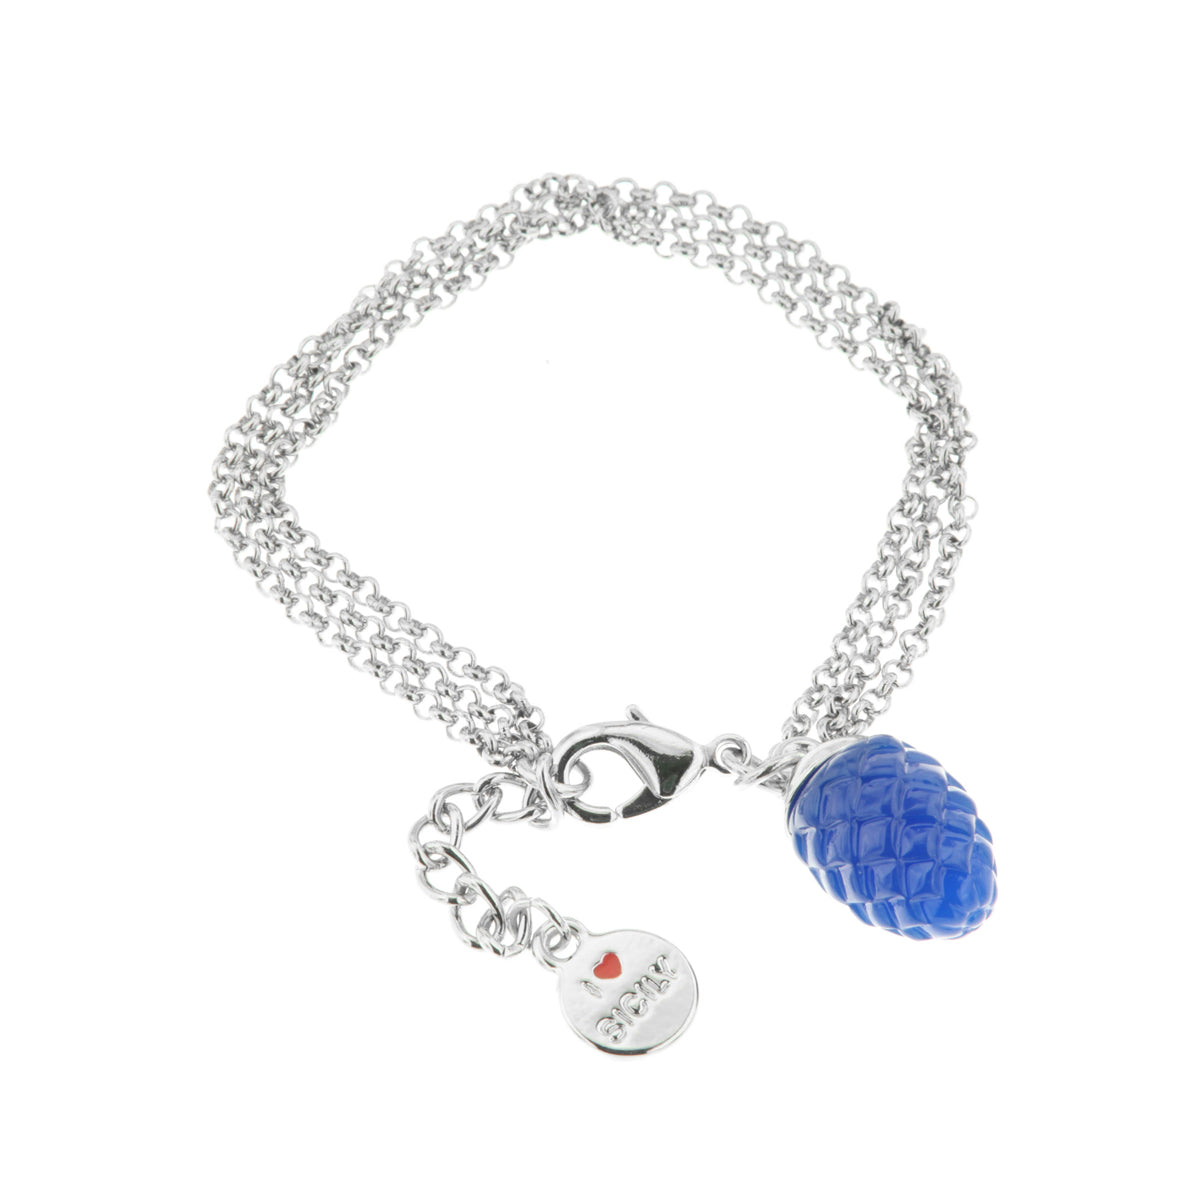 Metal bracelet with blue enamel charming pine -shaped pendant